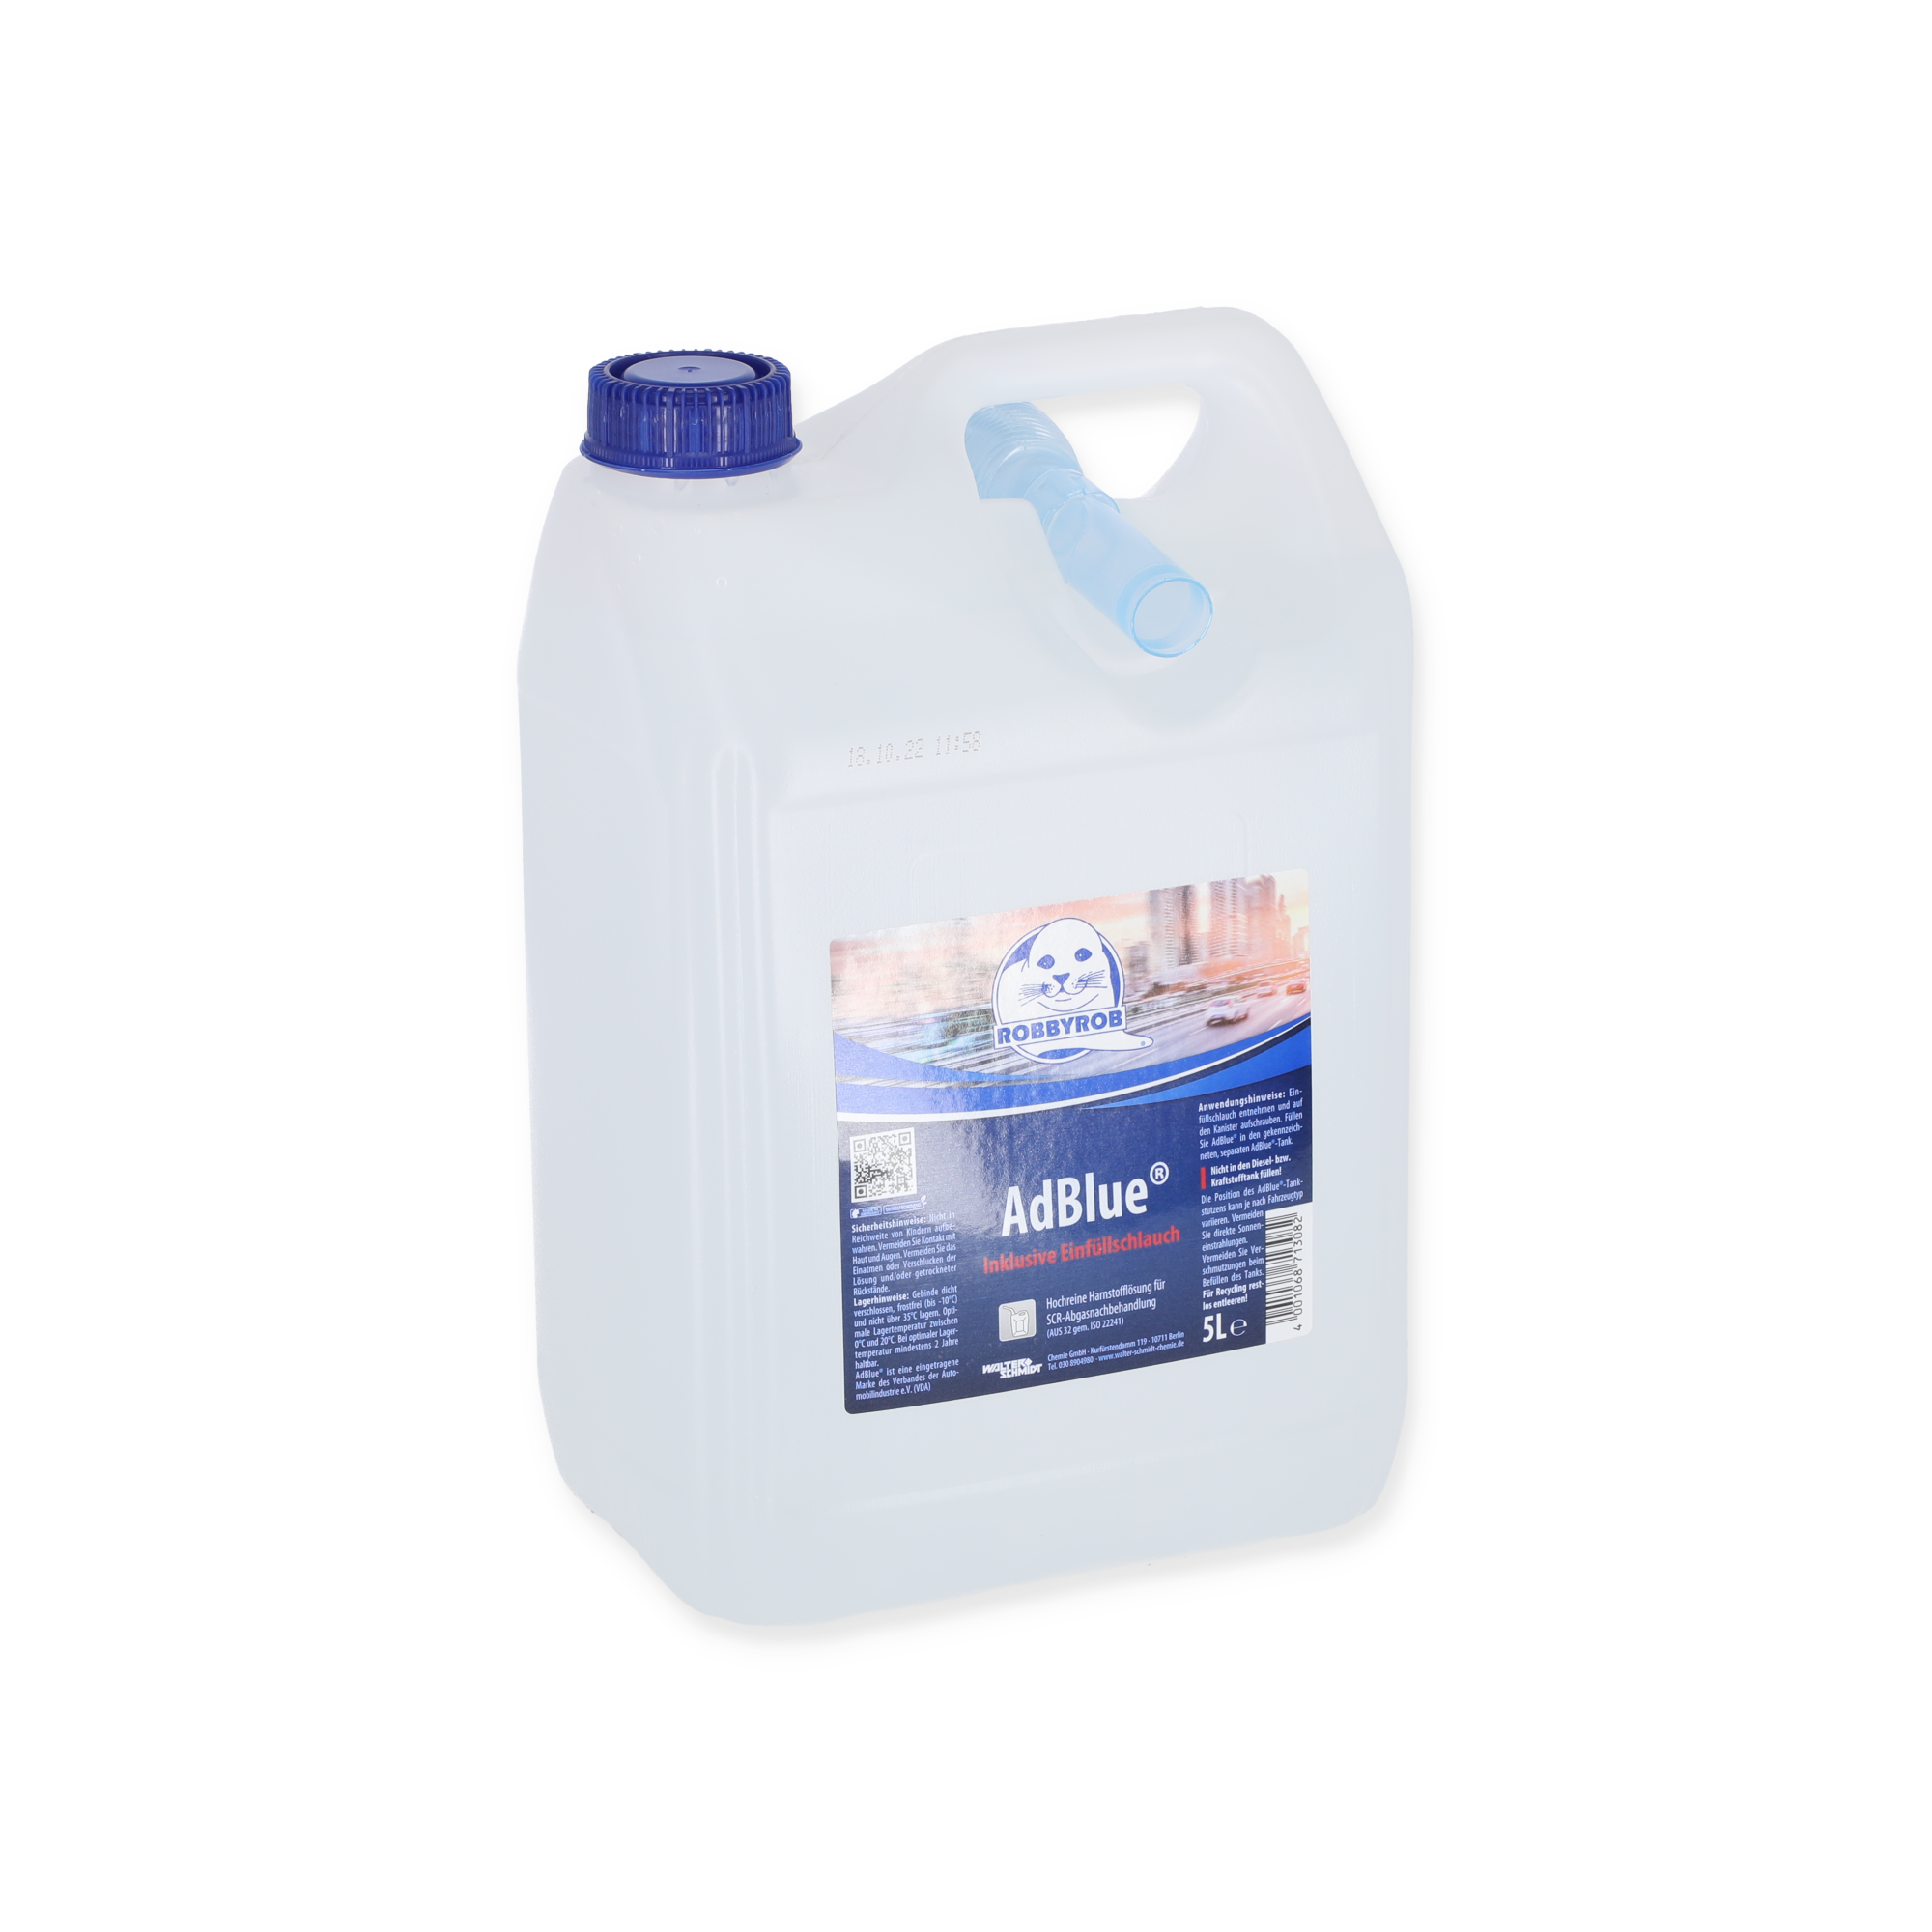 Cartechnic AdBlue® Harnstofflösung 5l inklusive Füllschlauch flexibel